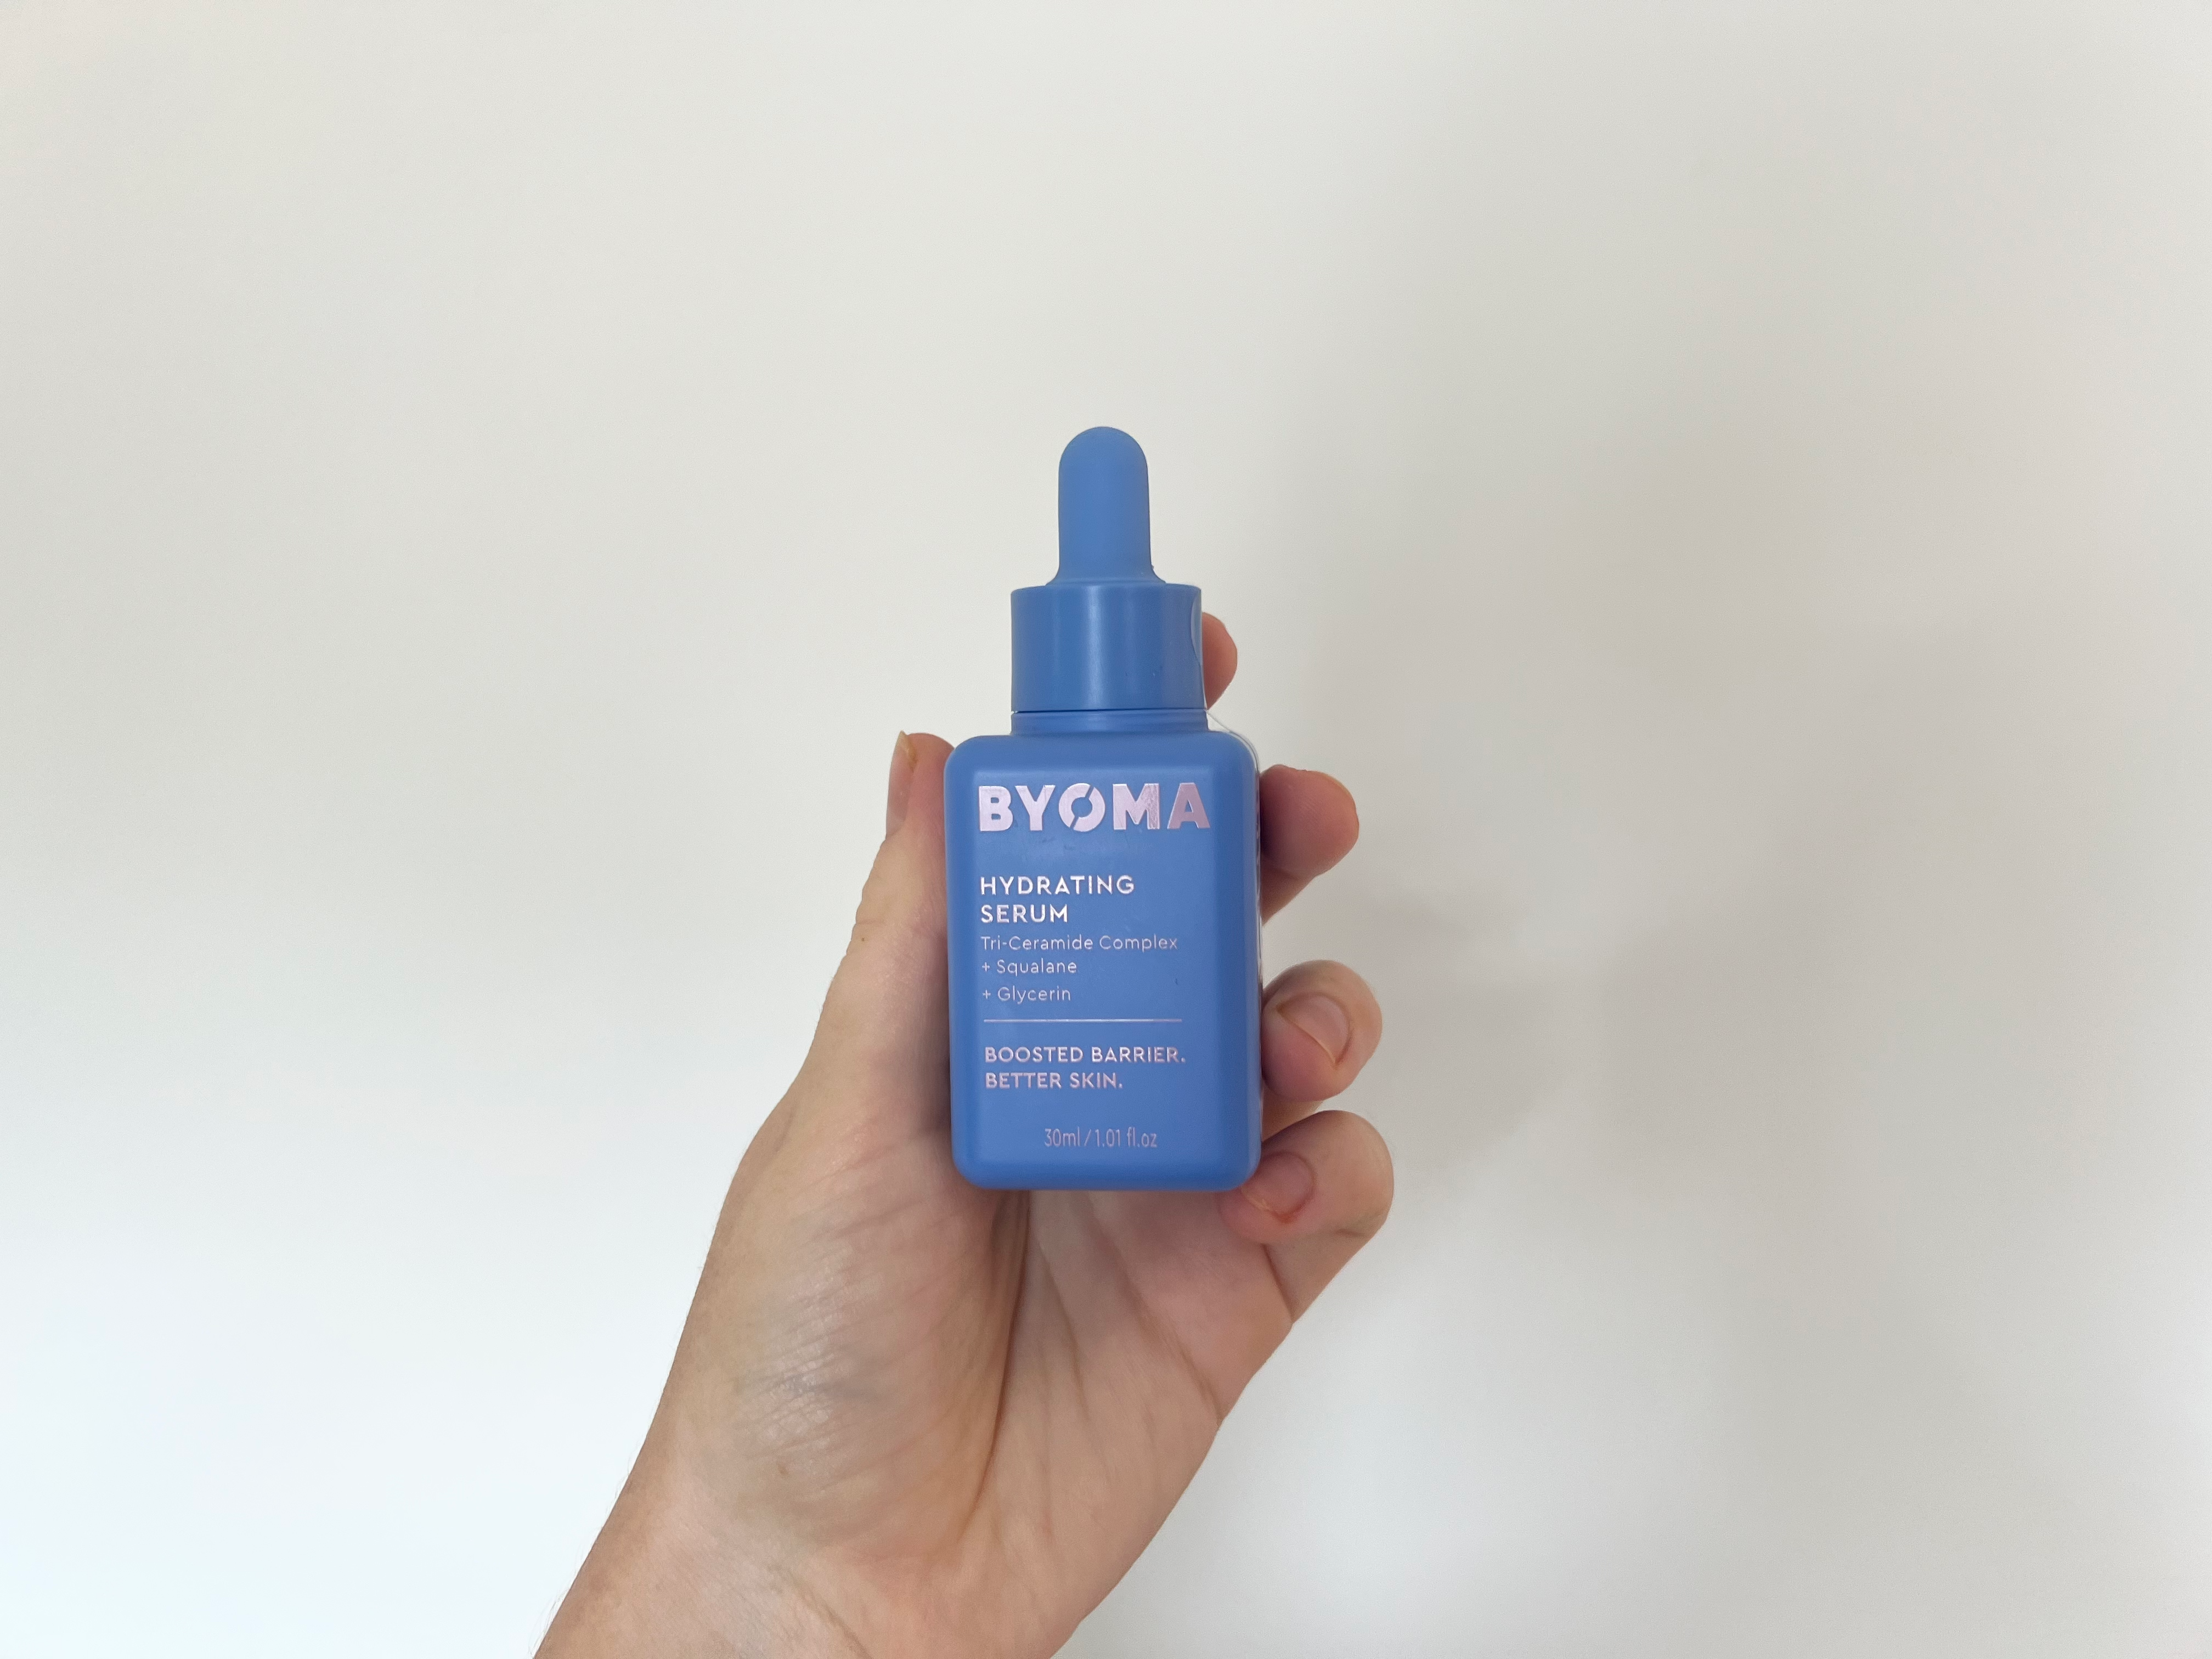 Byoma hydrating serum